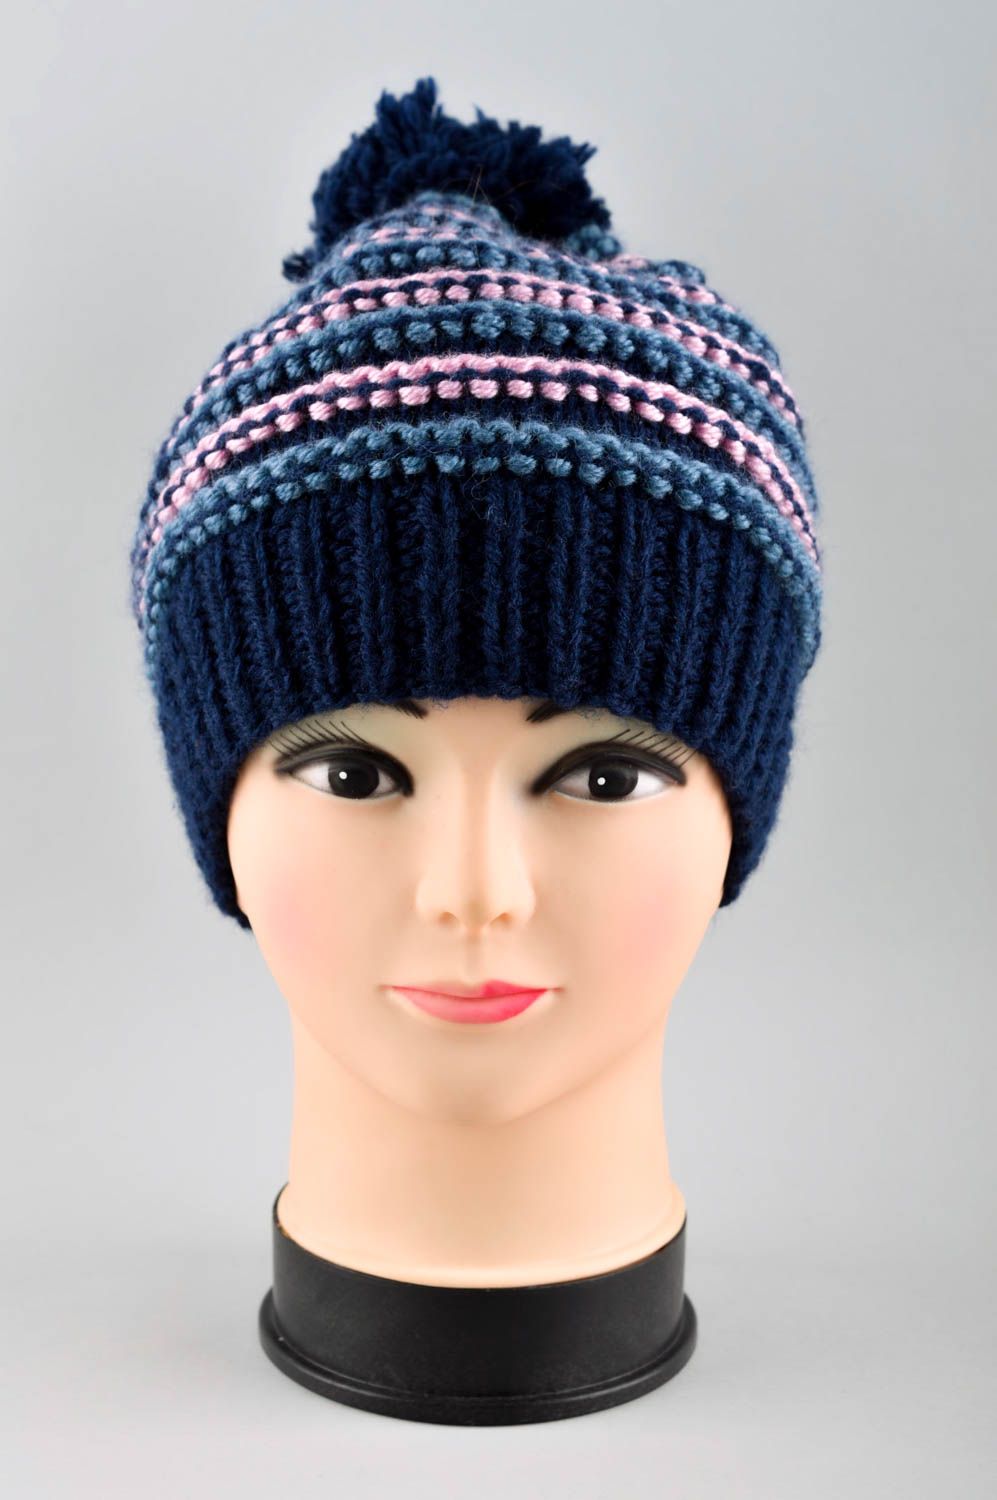 Hand-knitted hat women hat handmade winter accessories stylish hat for girls photo 2